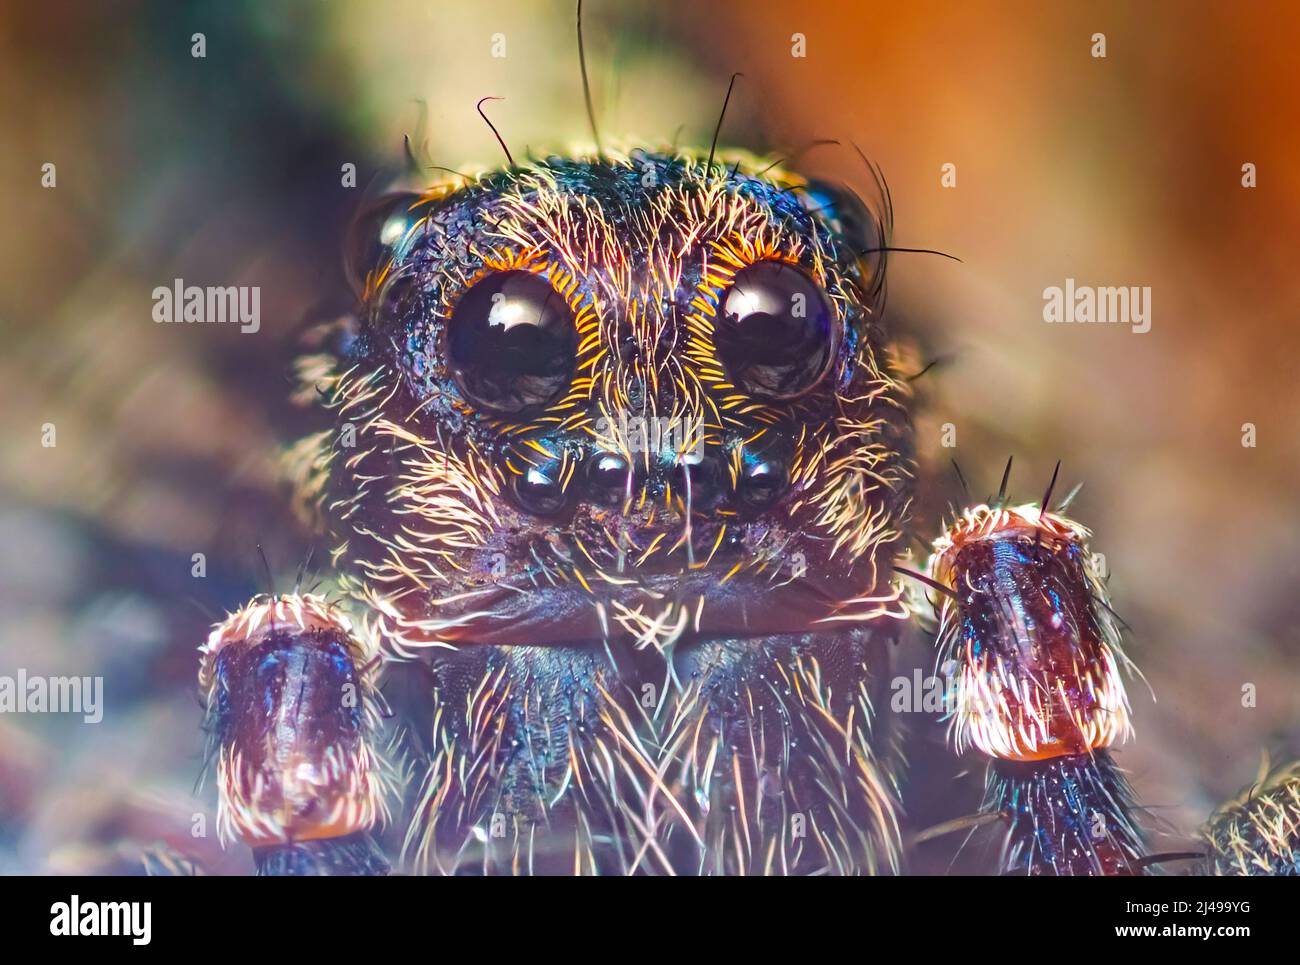 Portrait of Thin-legged Wolf Spider - Genus Pardosa, close up detaillierte Fokus gestapelt Foto Stockfoto